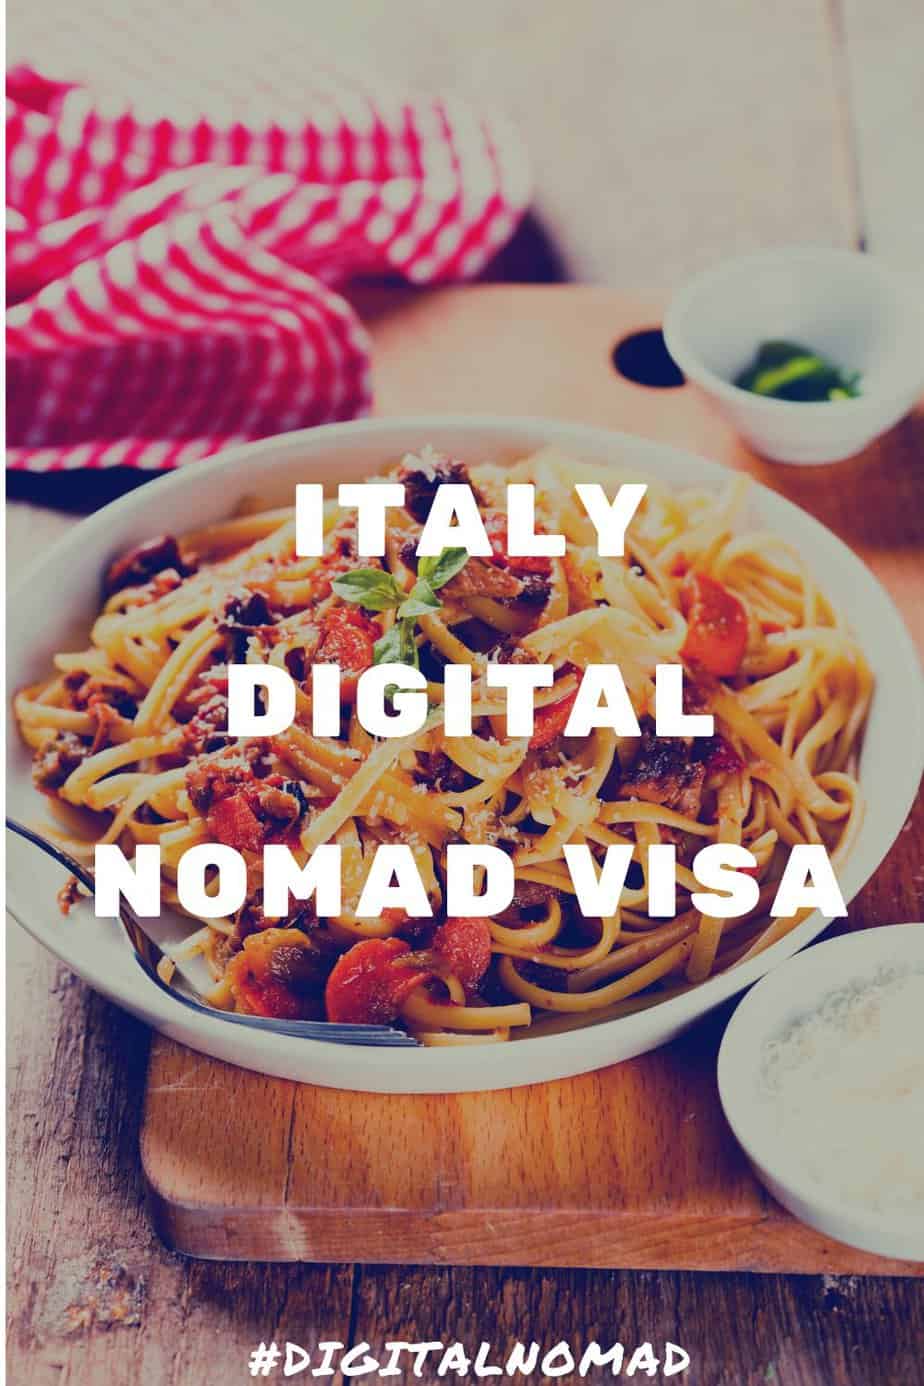 Italy Digital Nomad Visa – The Latest Information